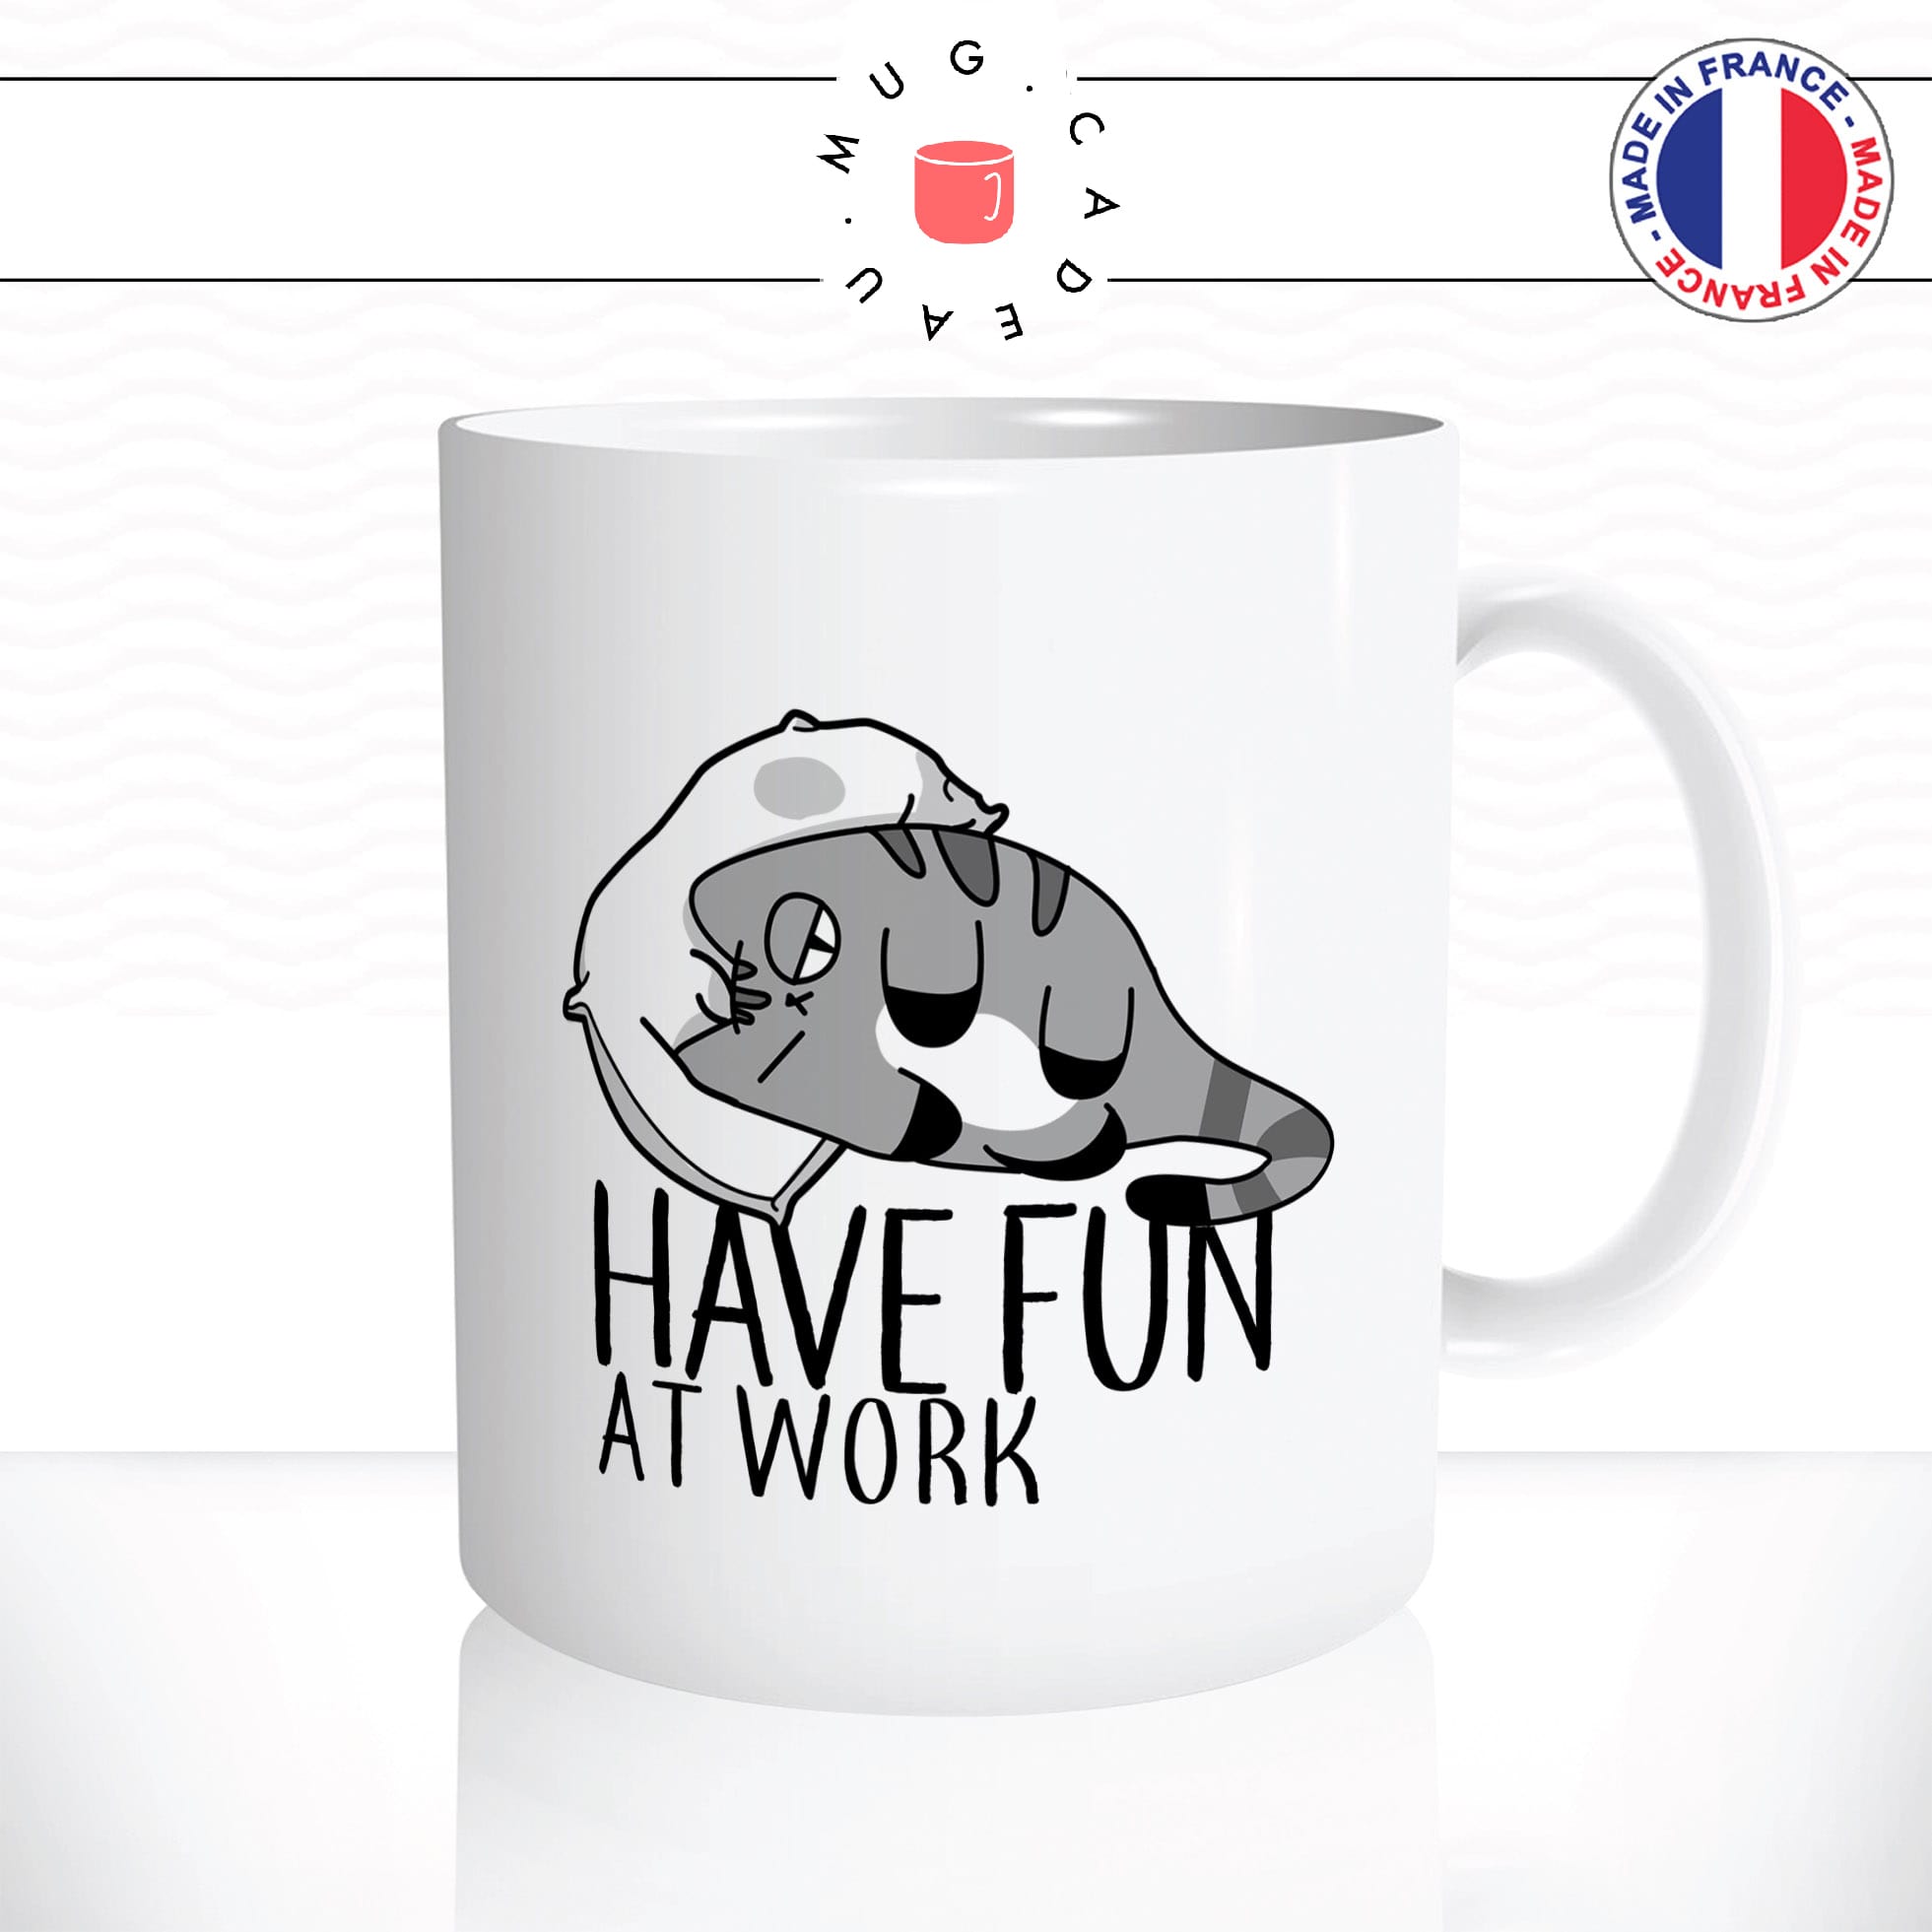 mug-tasse-chat-chaton-blanc-cat-have-fun-at-work-travail-sieste-dormir-dors-content-heureux-ironique-drole-humour-idee-cadeau-cool-fun-original-personnalisé